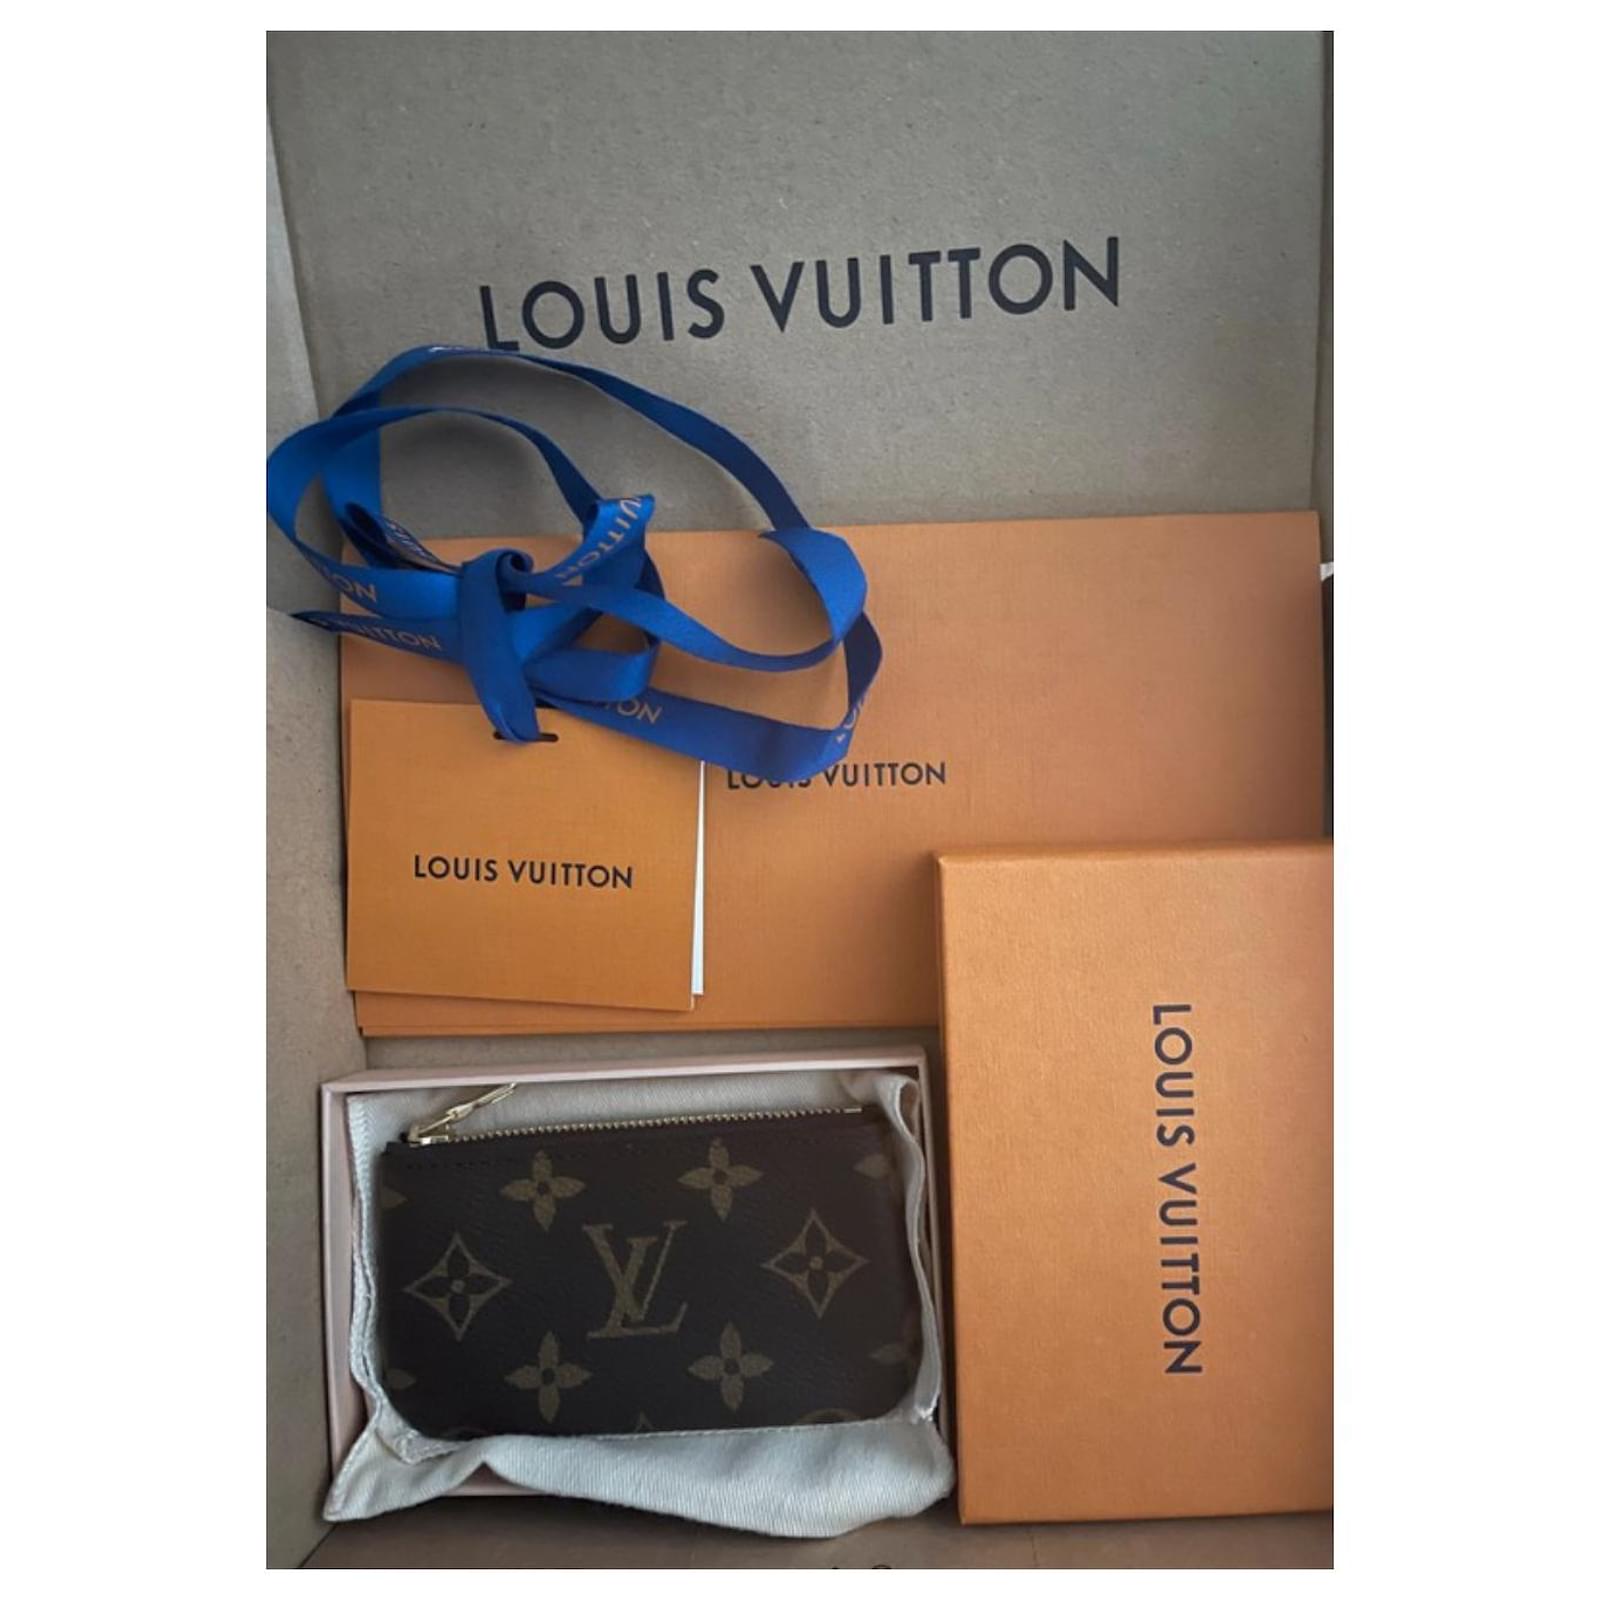 Monedero - Llavero Monogram Louis Vuitton  Louis vuitton key pouch, Key  pouch, Louis vuitton